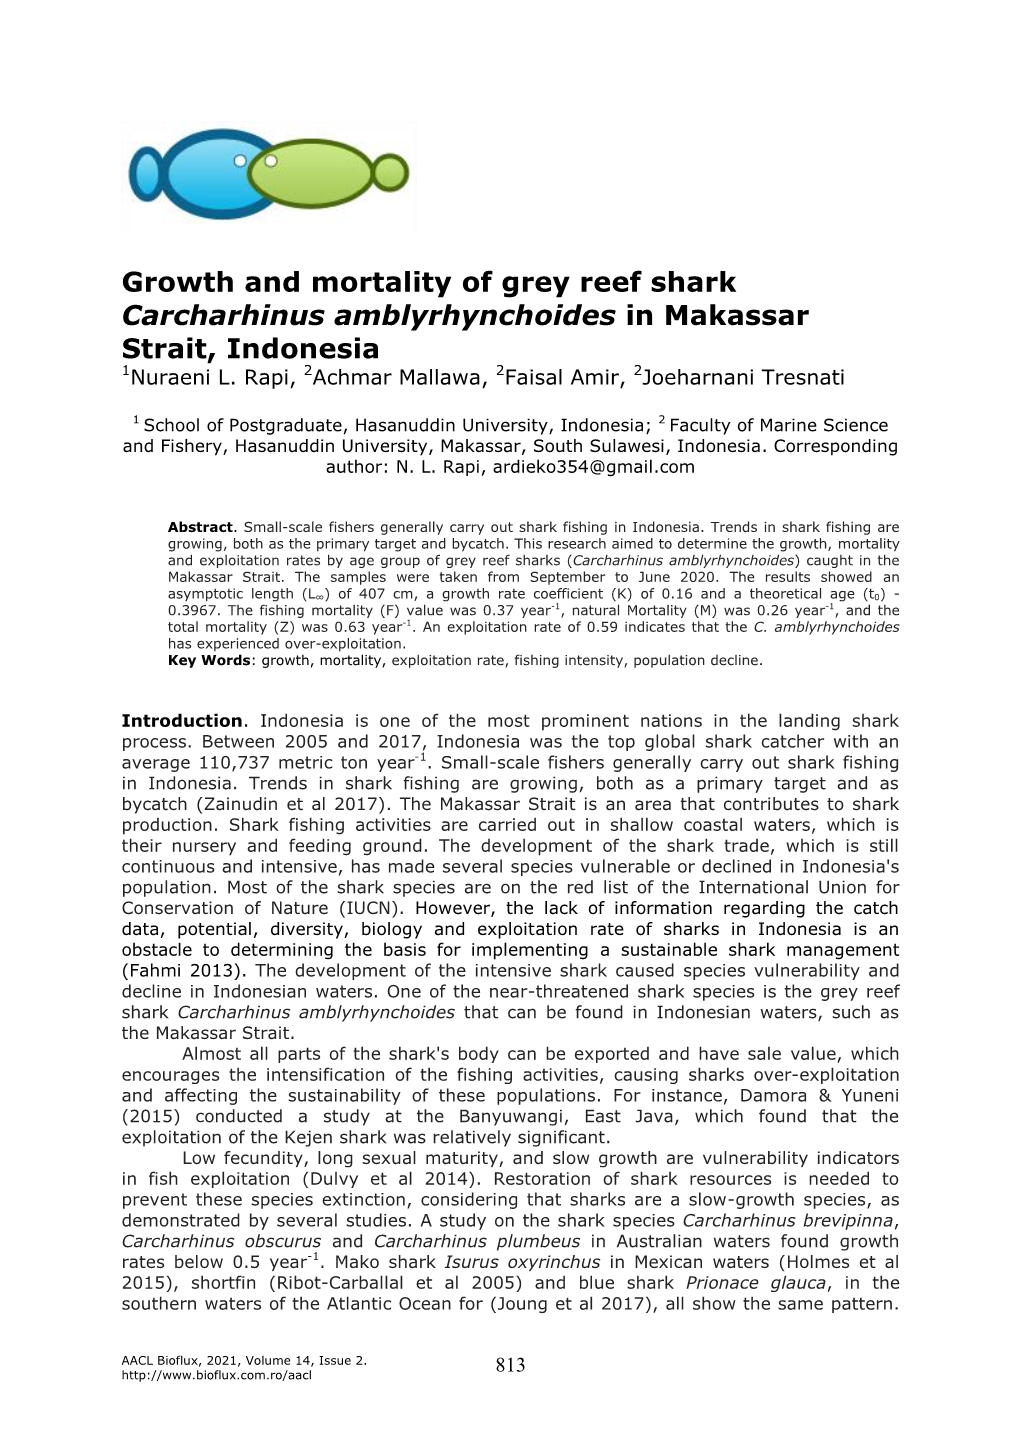 Growth and Mortality of Grey Reef Shark Carcharhinus Amblyrhynchoides in Makassar Strait, Indonesia 1Nuraeni L